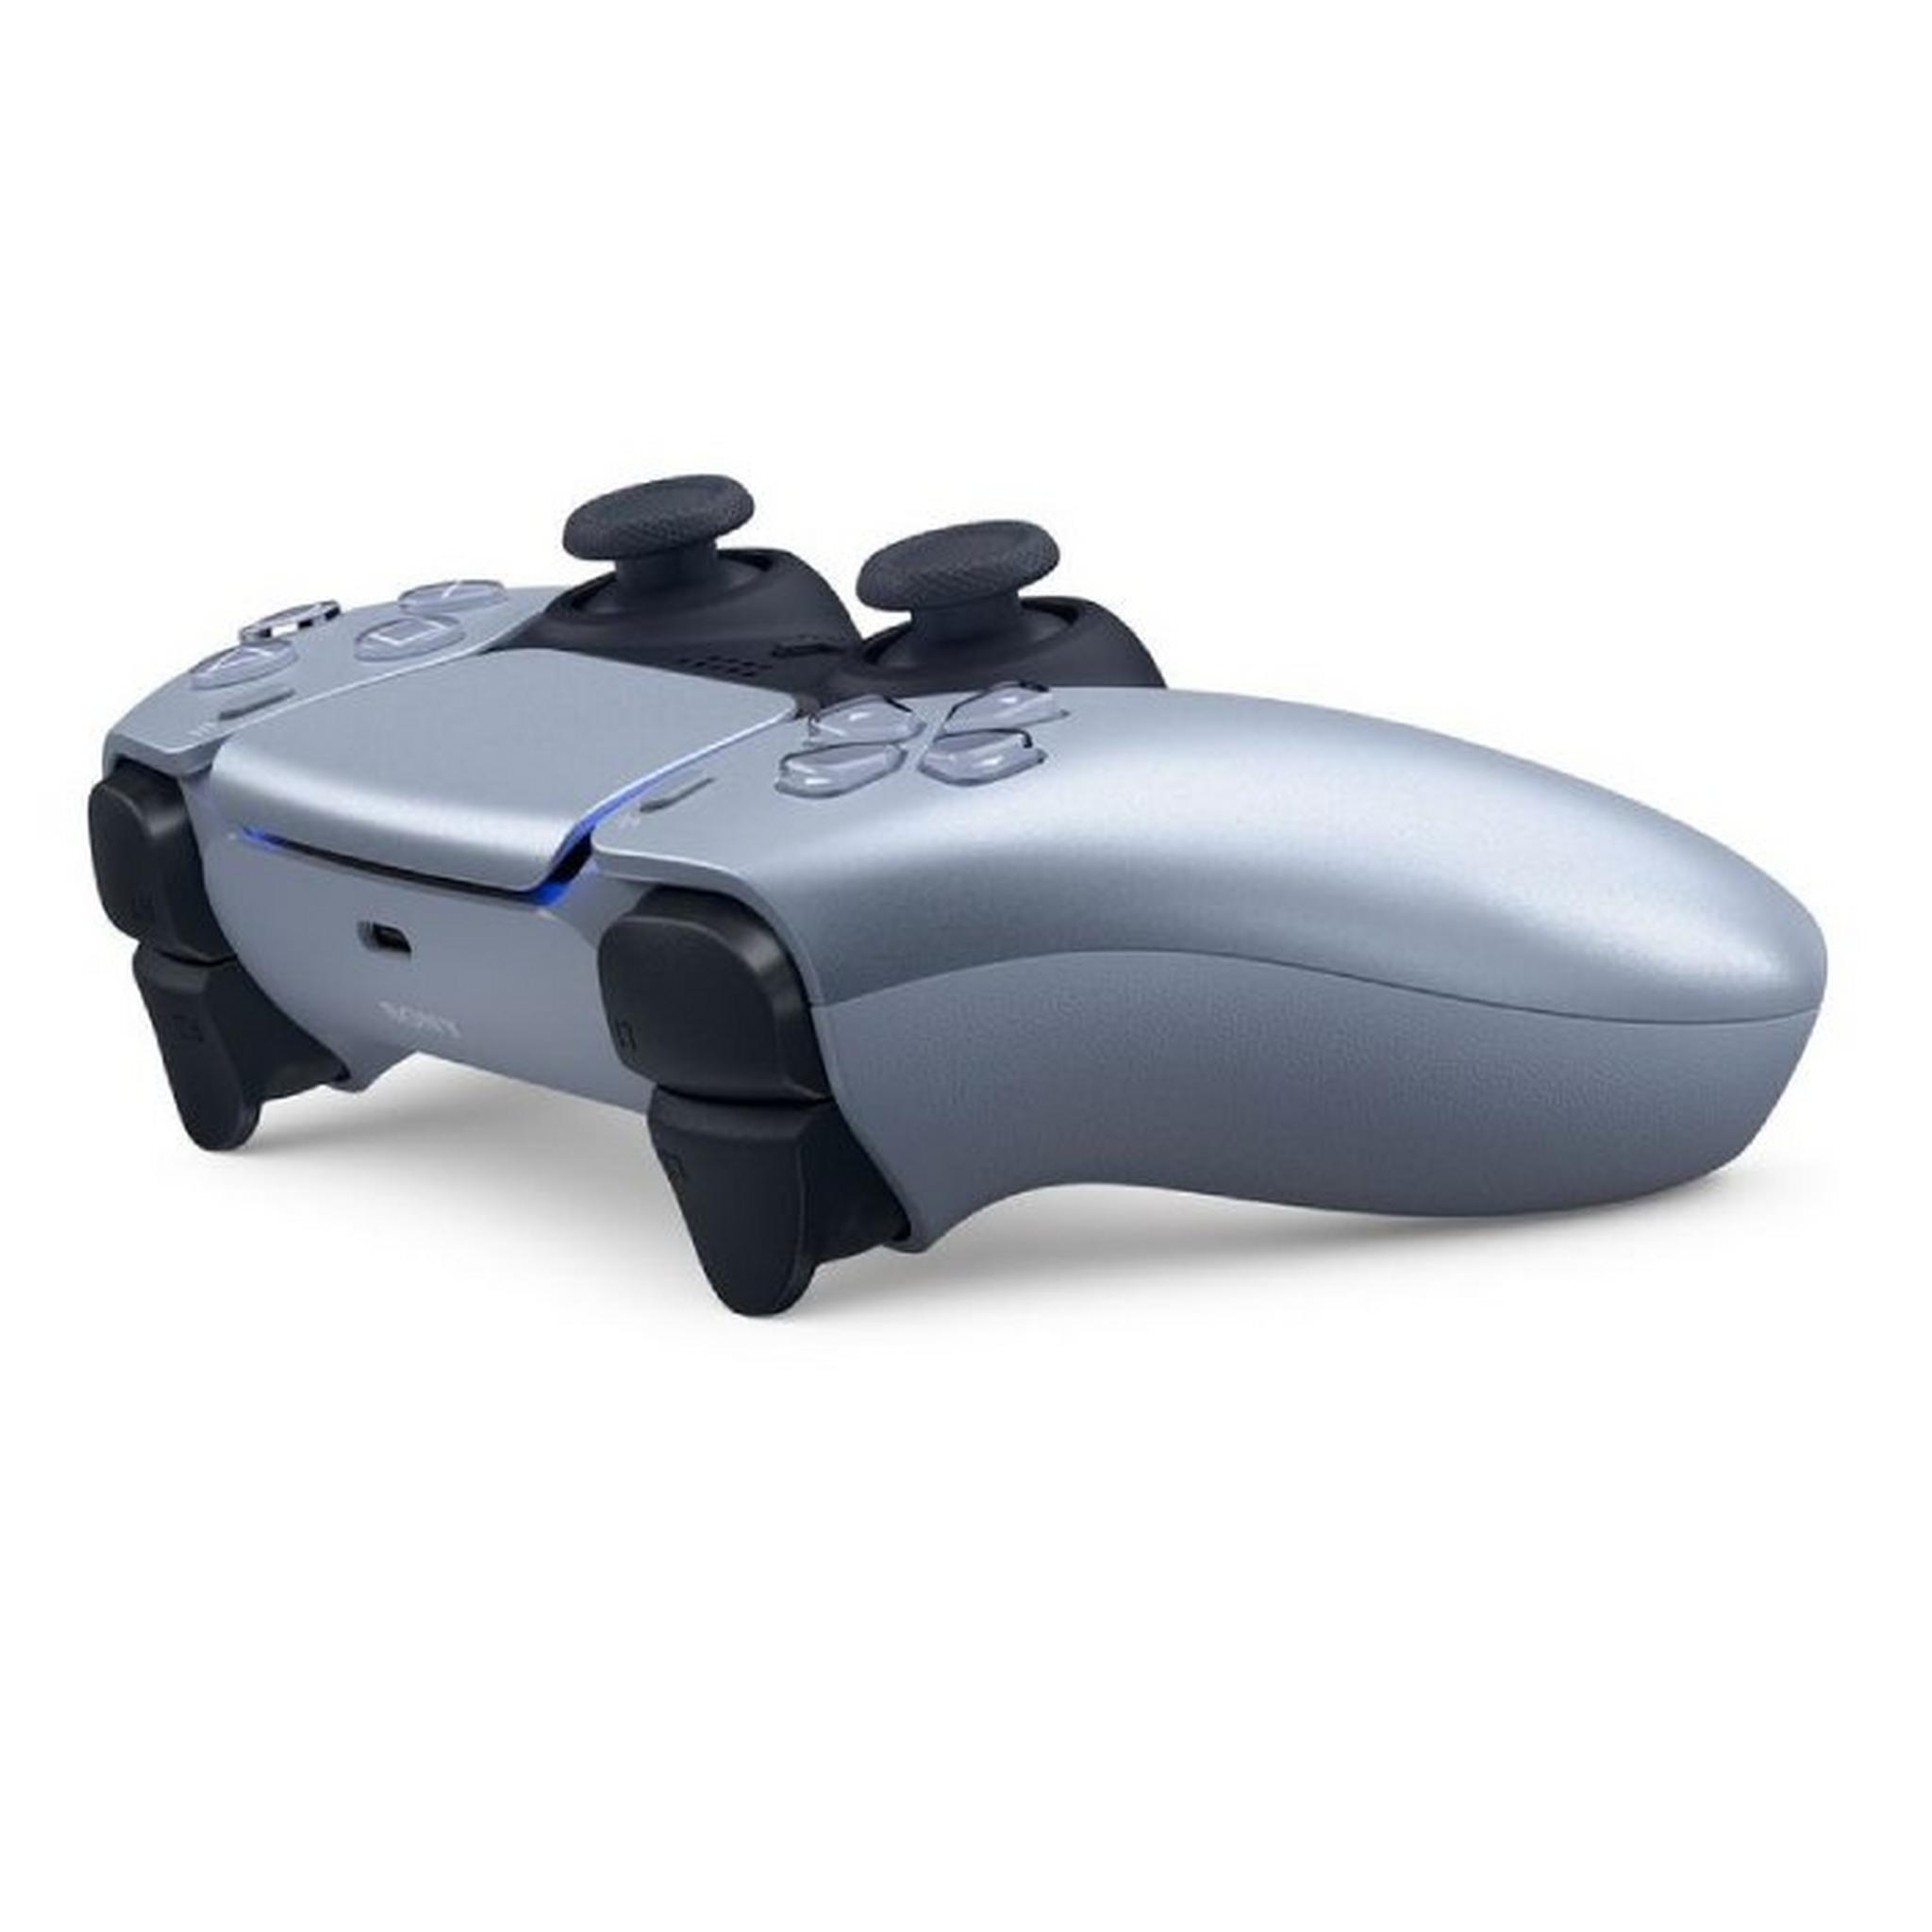 SONY Playstation 5 DualSense Wireless Controller, CFI-ZCT1W08X - Sterling Silver